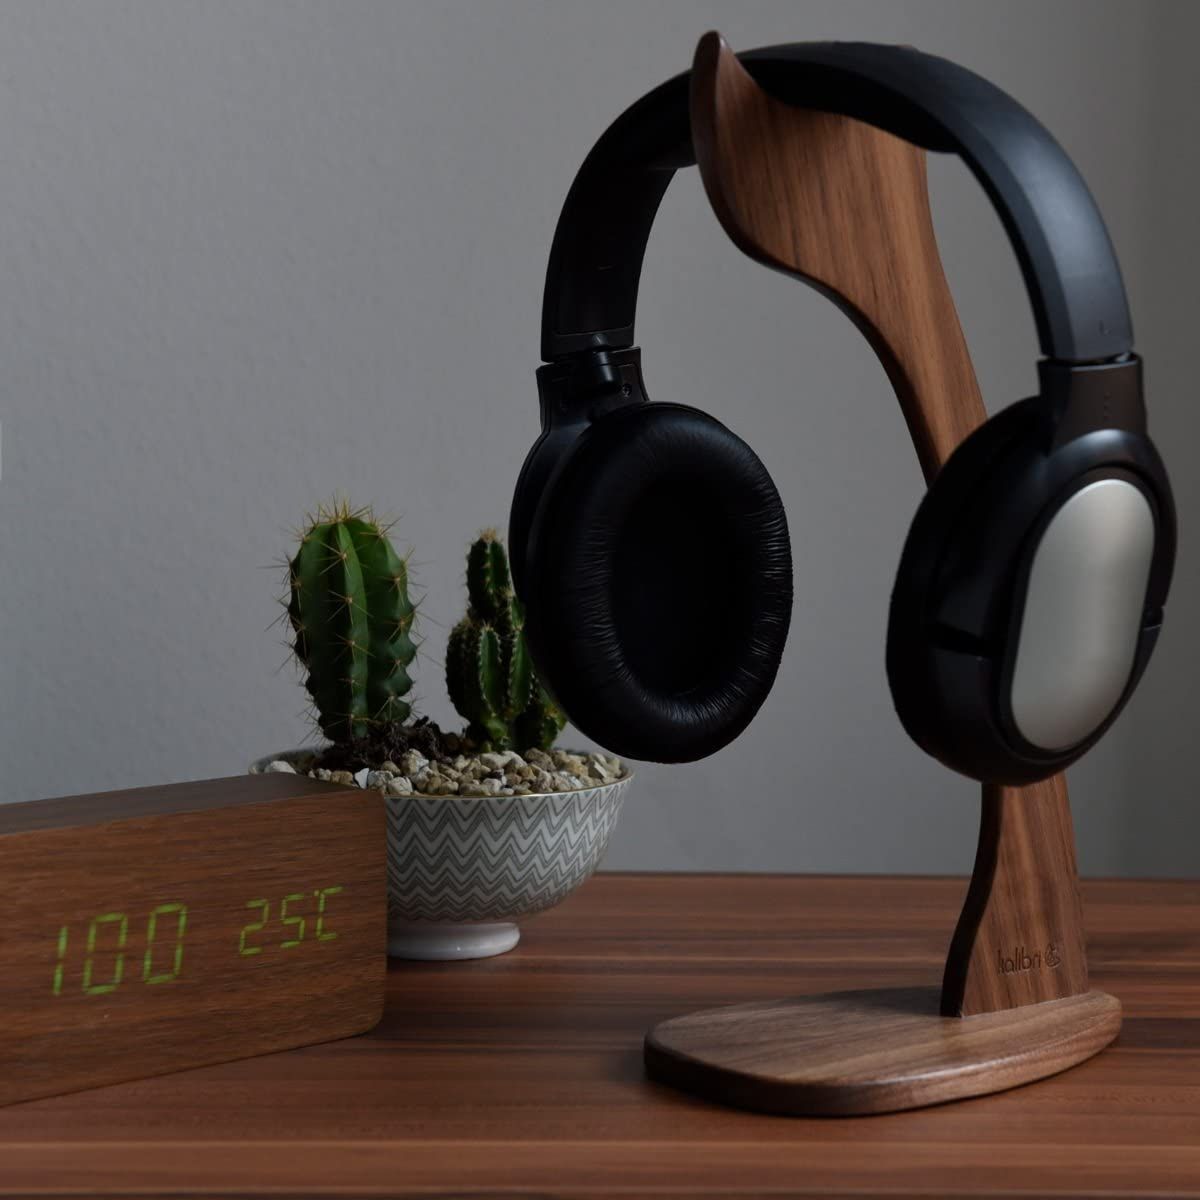 kalibri-wooden-headphone-holder-stand-vasi-akoustikon-apo-fysiko-ksilo-wanut-brown-2.jpg